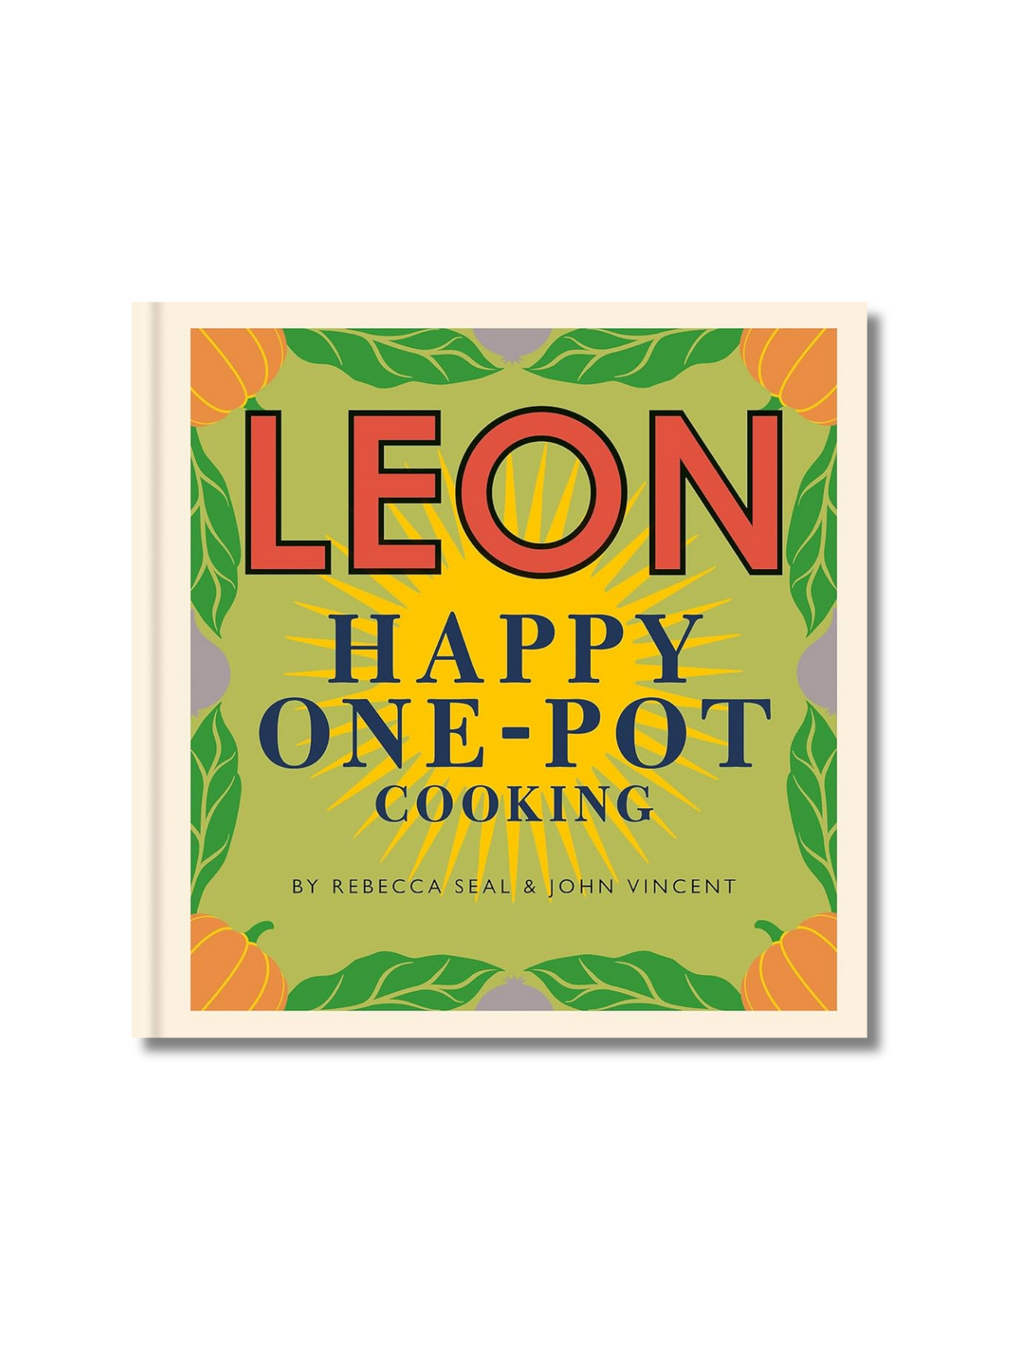 Leon: Happy One-pot Cooking